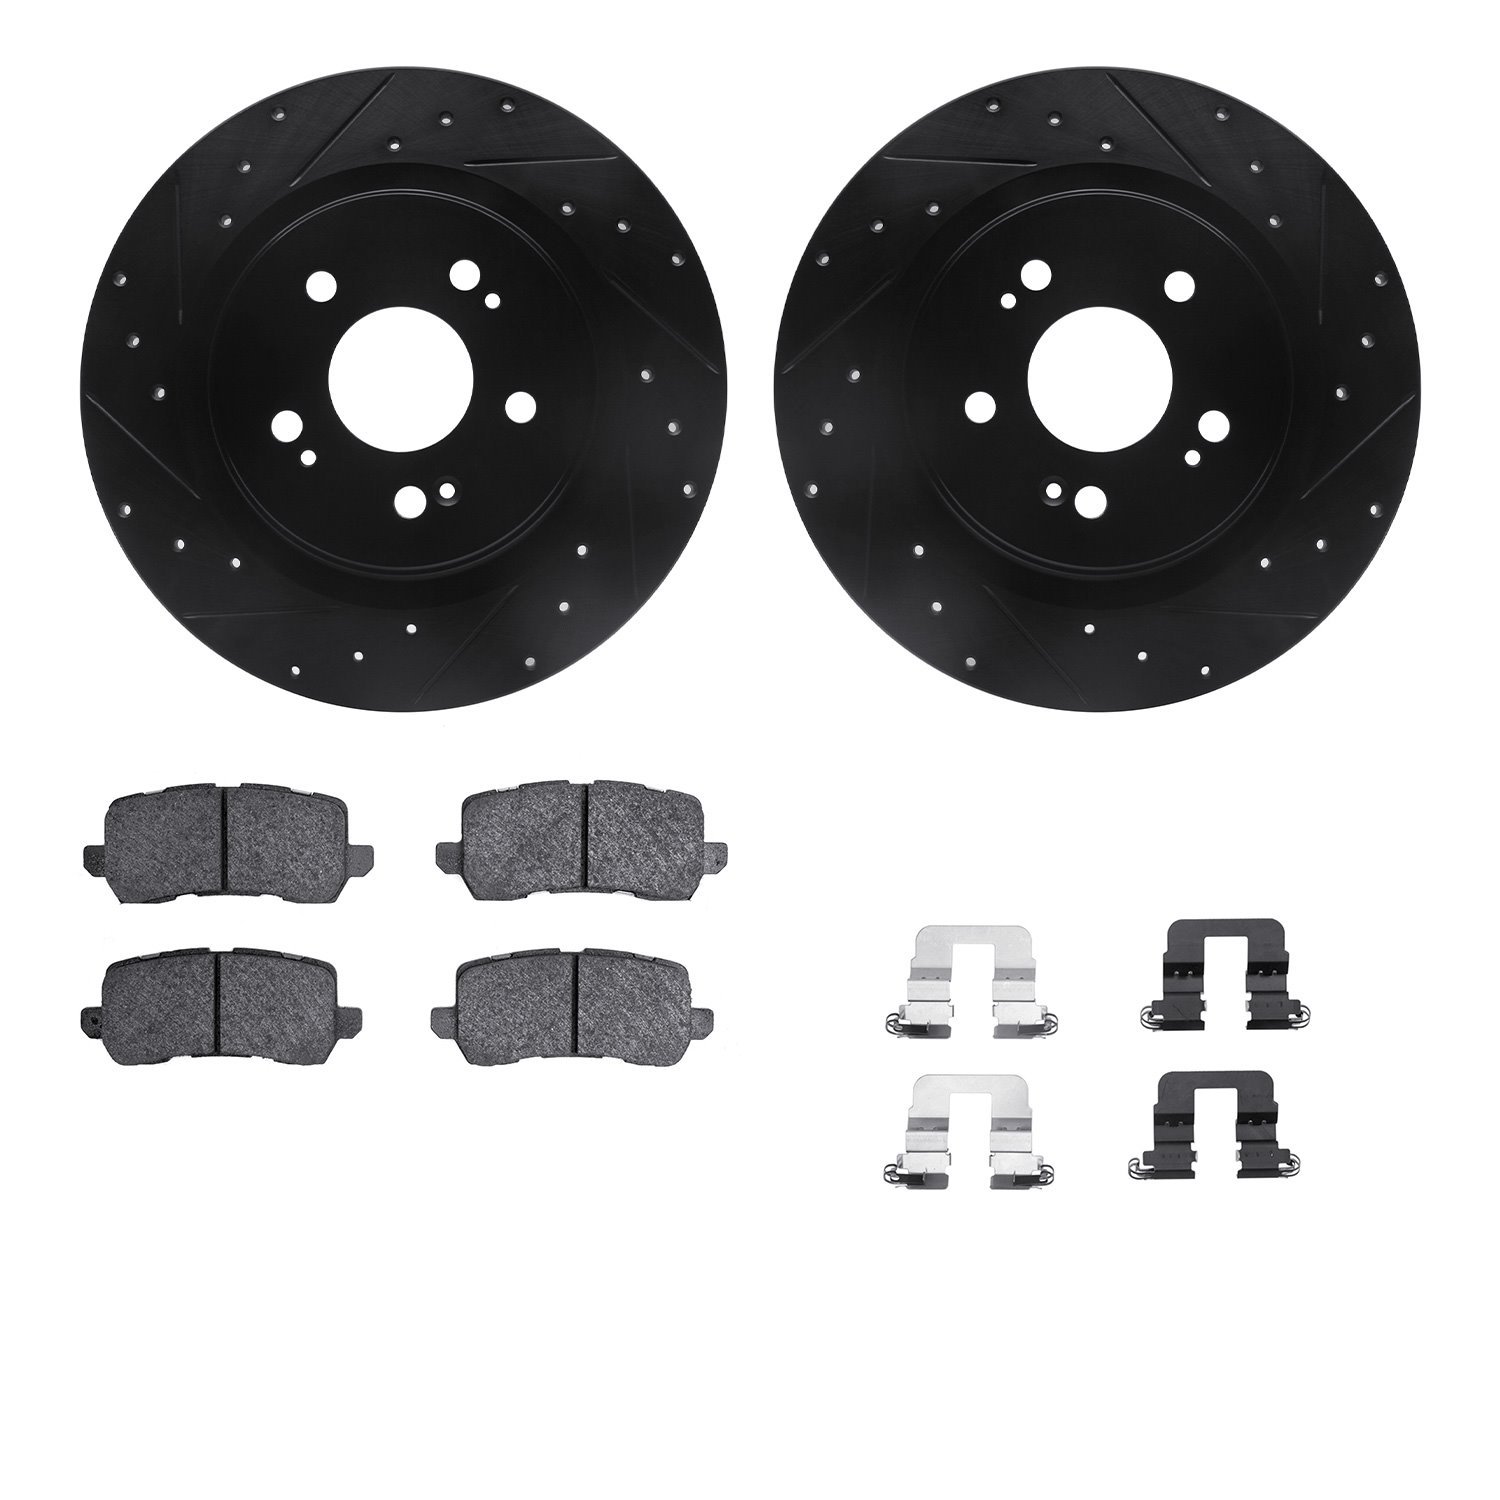 8312-59099 Drilled/Slotted Brake Rotors with 3000-Series Ceramic Brake Pads Kit & Hardware [Black], Fits Select Acura/Honda, Pos